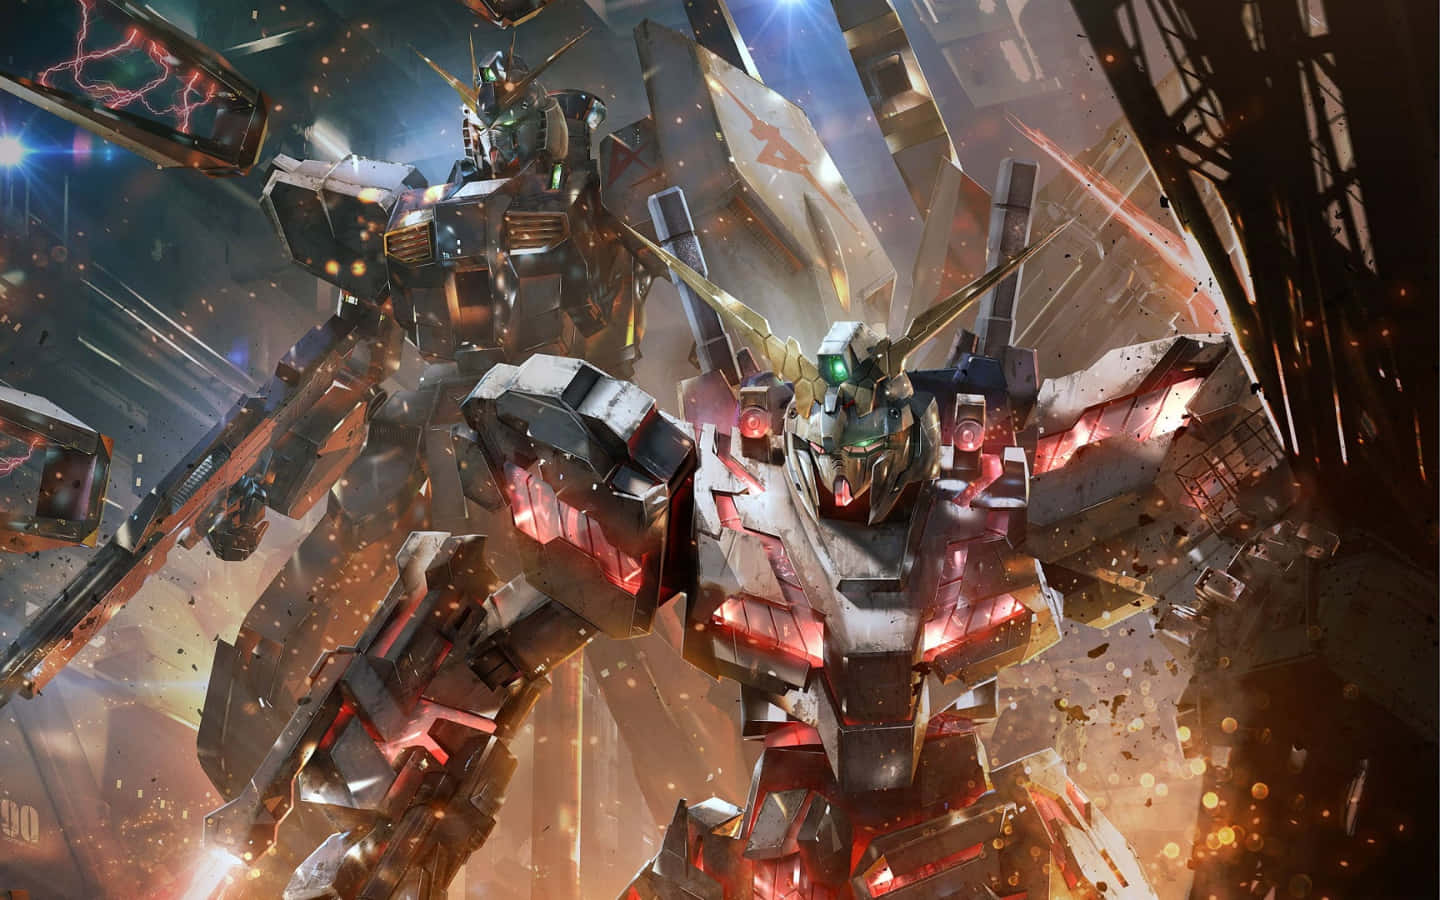 "Gundam Desktop experience an immersive journey into the world of mobile anime robots" Wallpaper